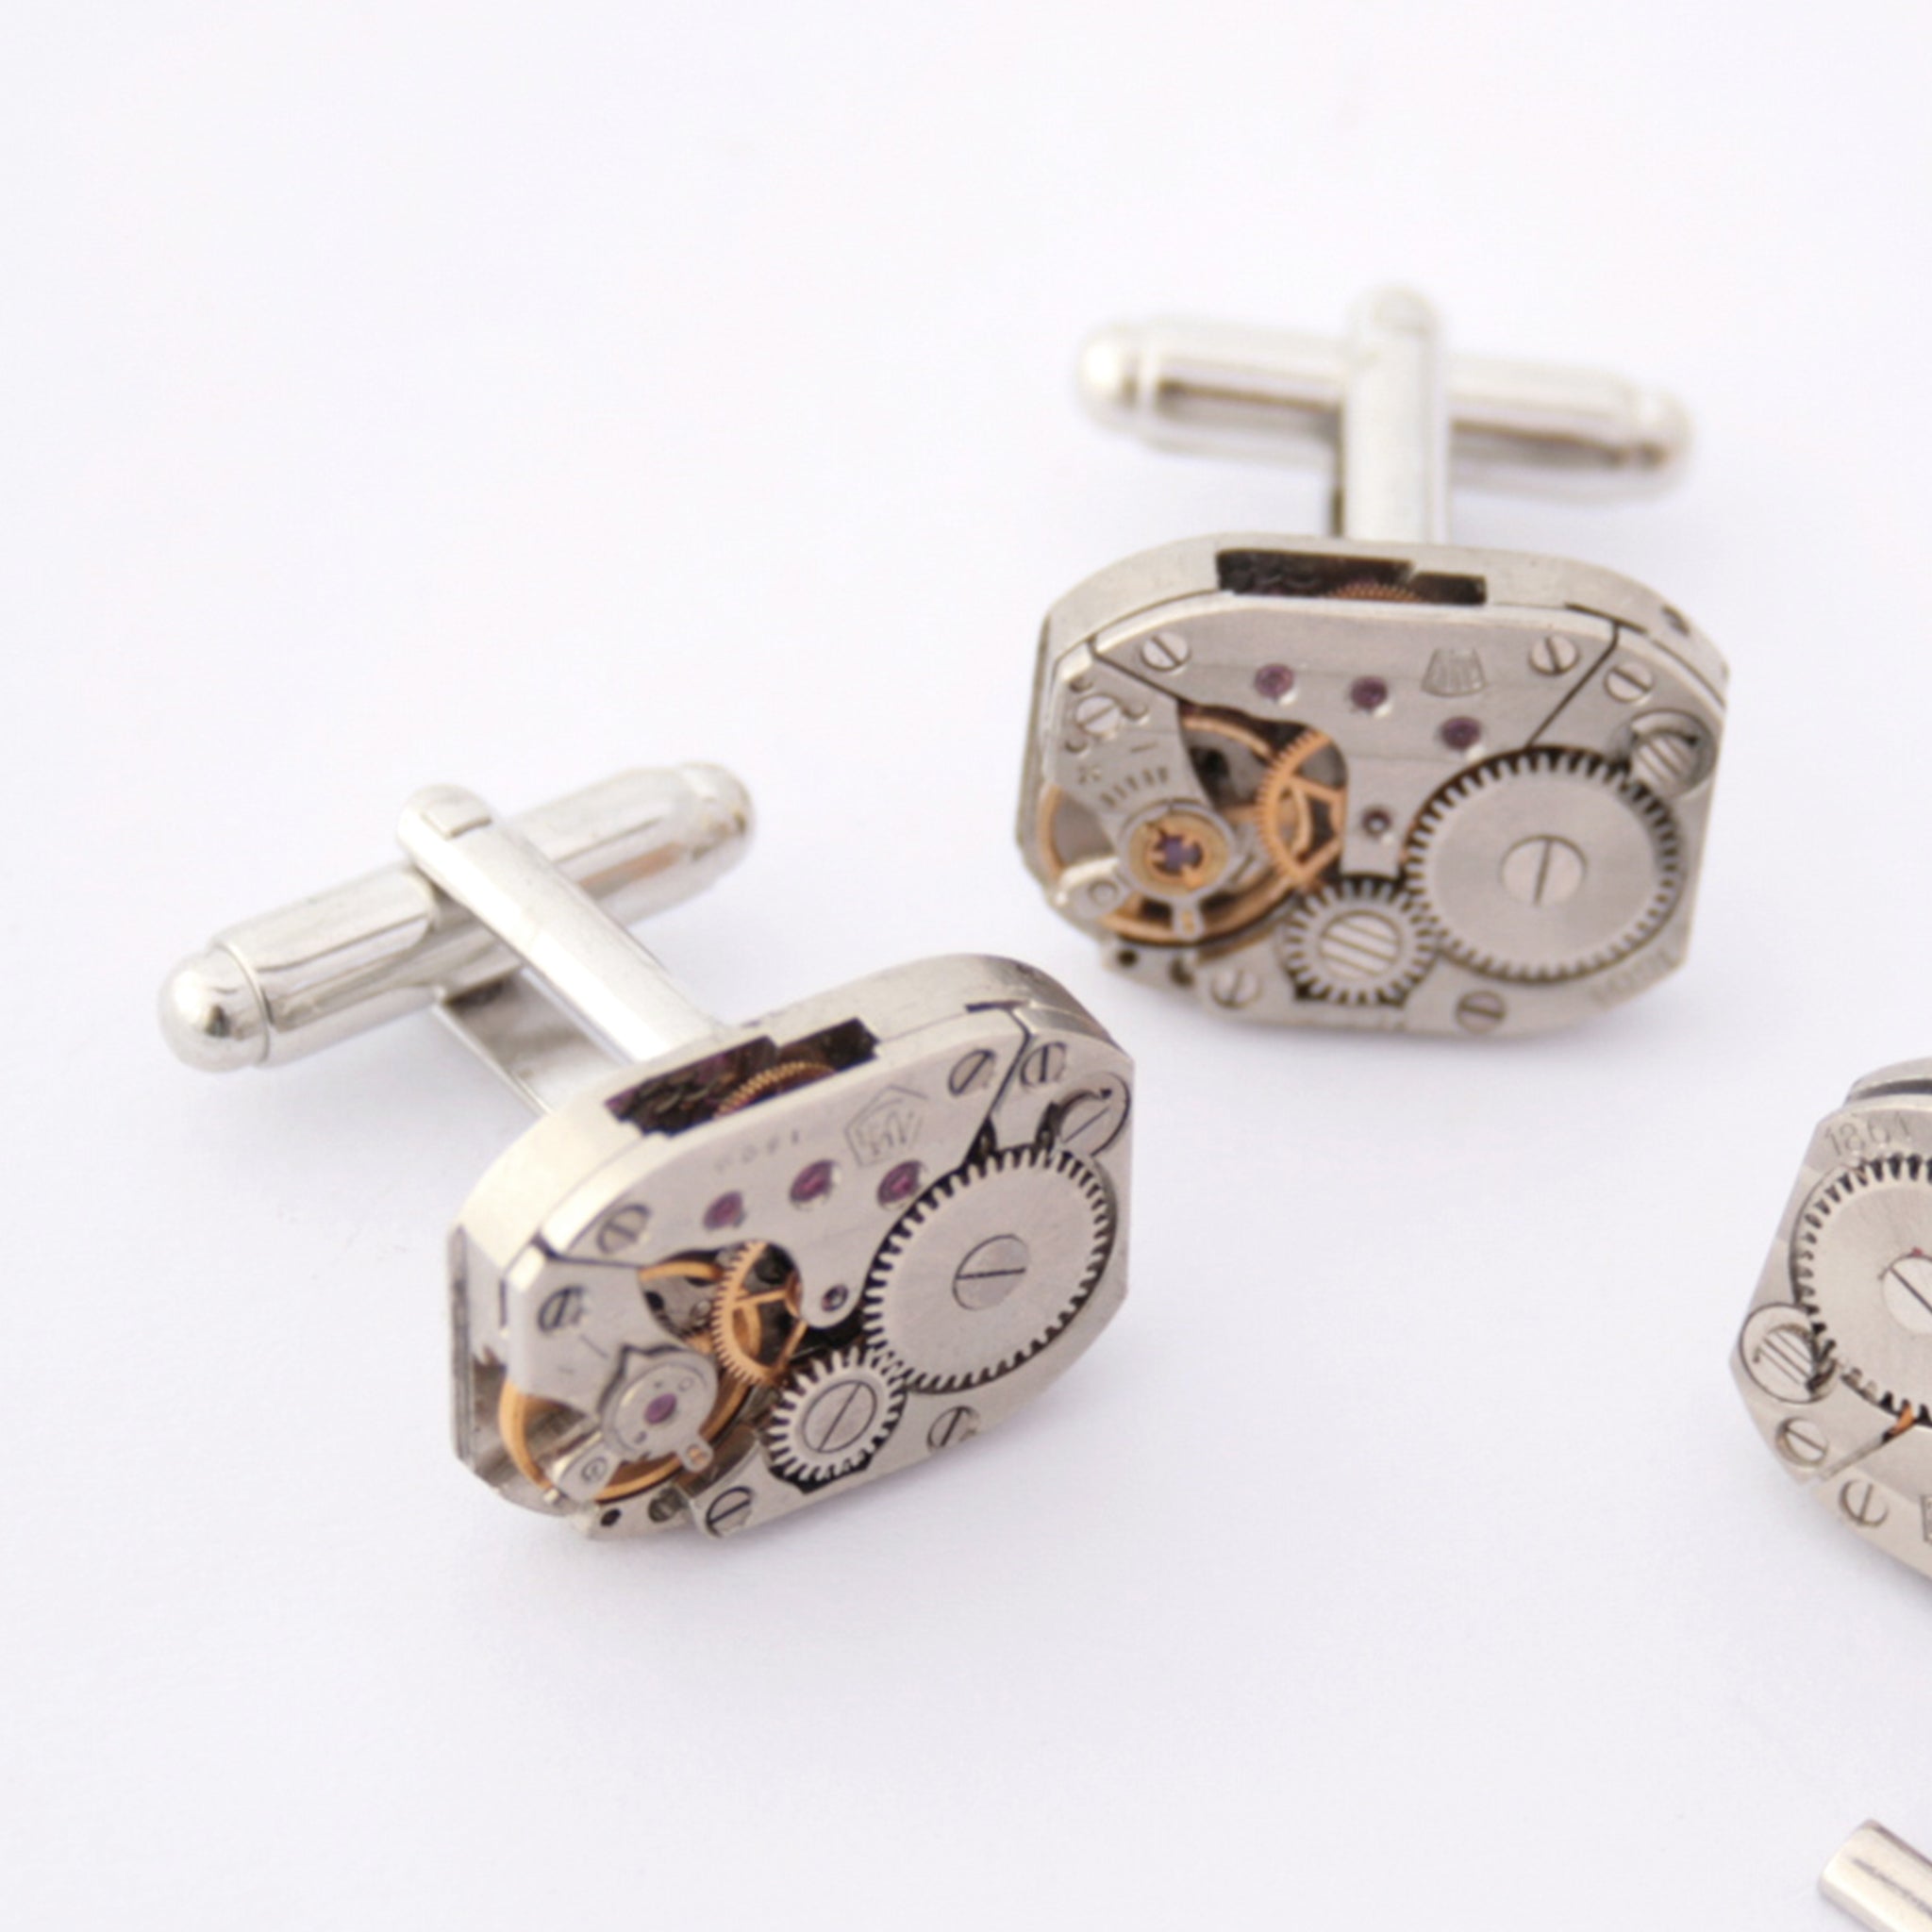 Steampunk Cufflinks made of watch movements